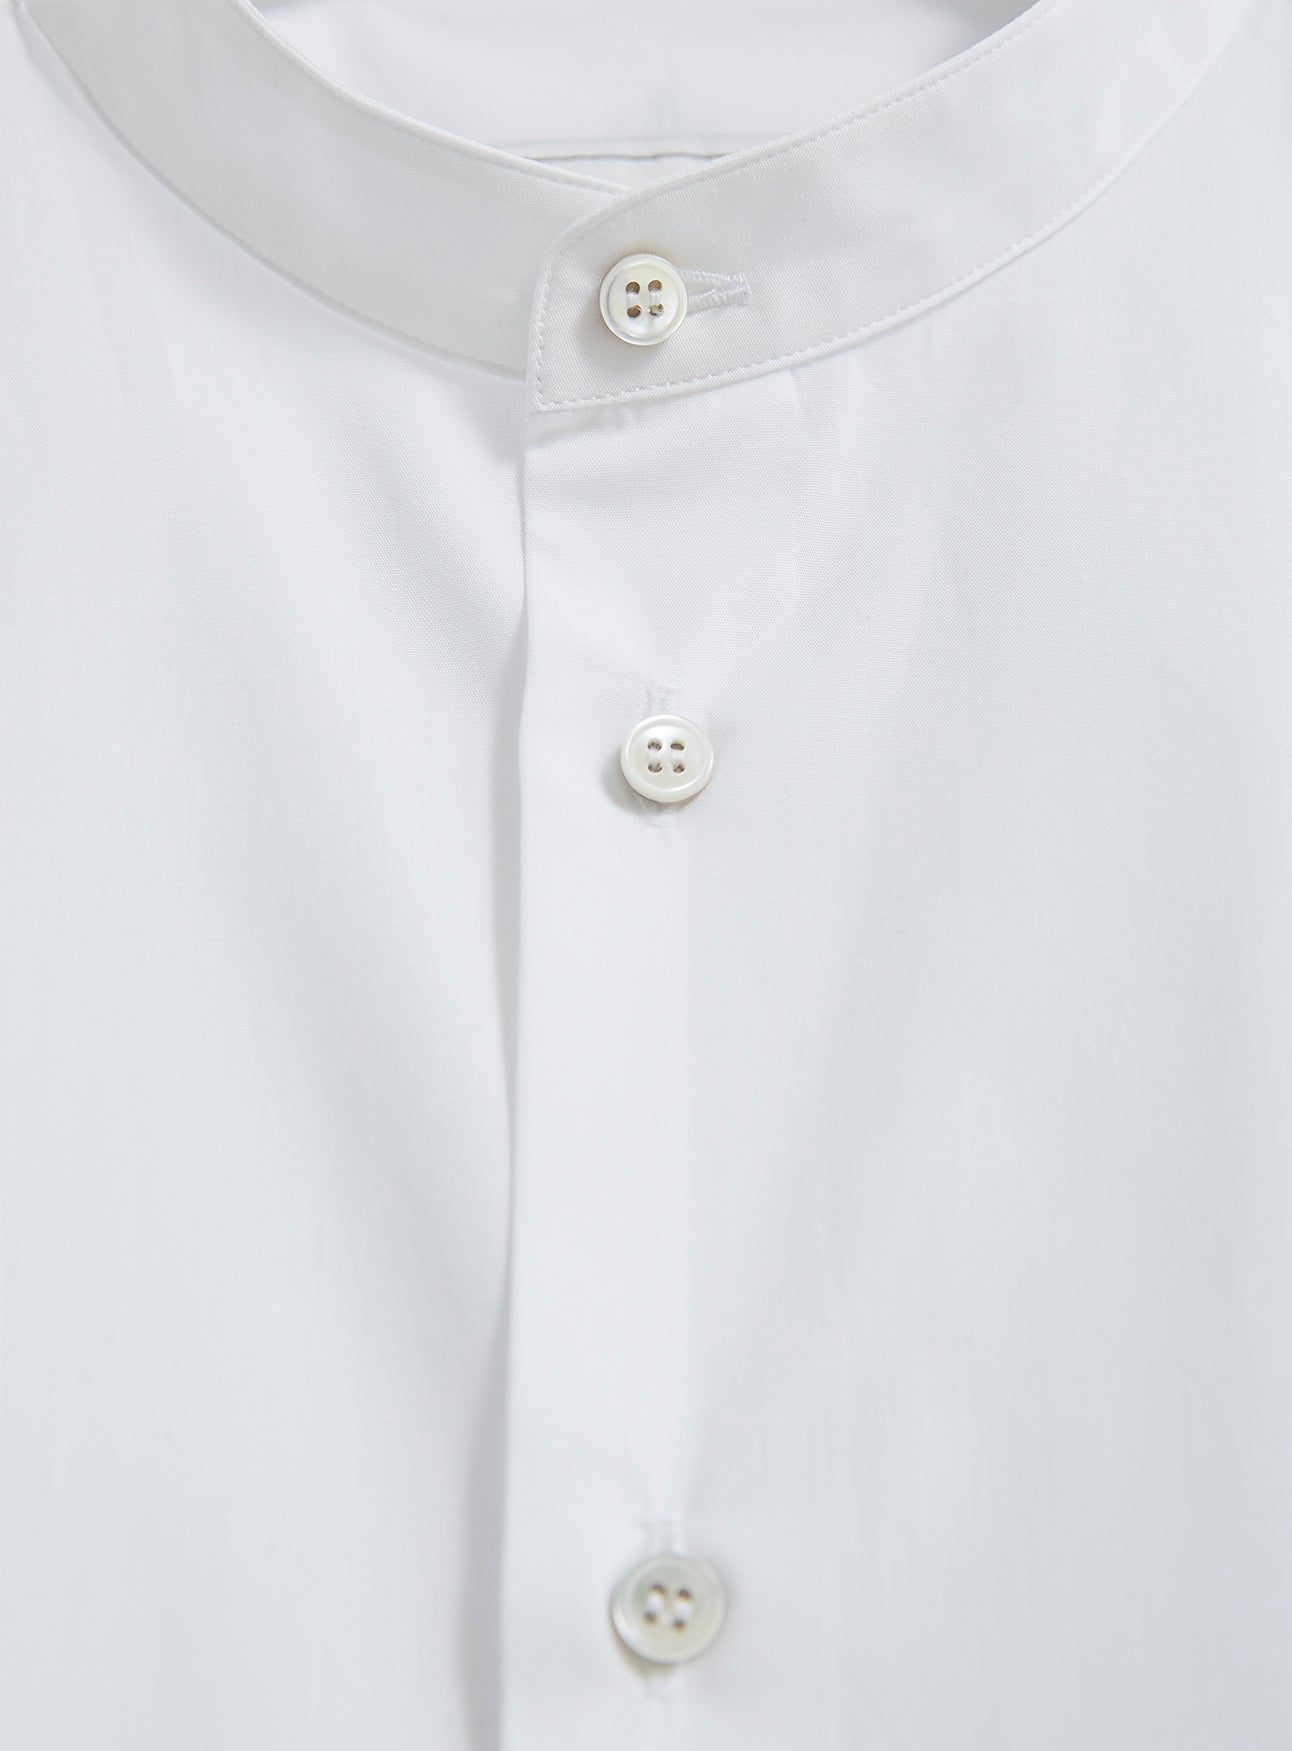 long sleeve white shirt